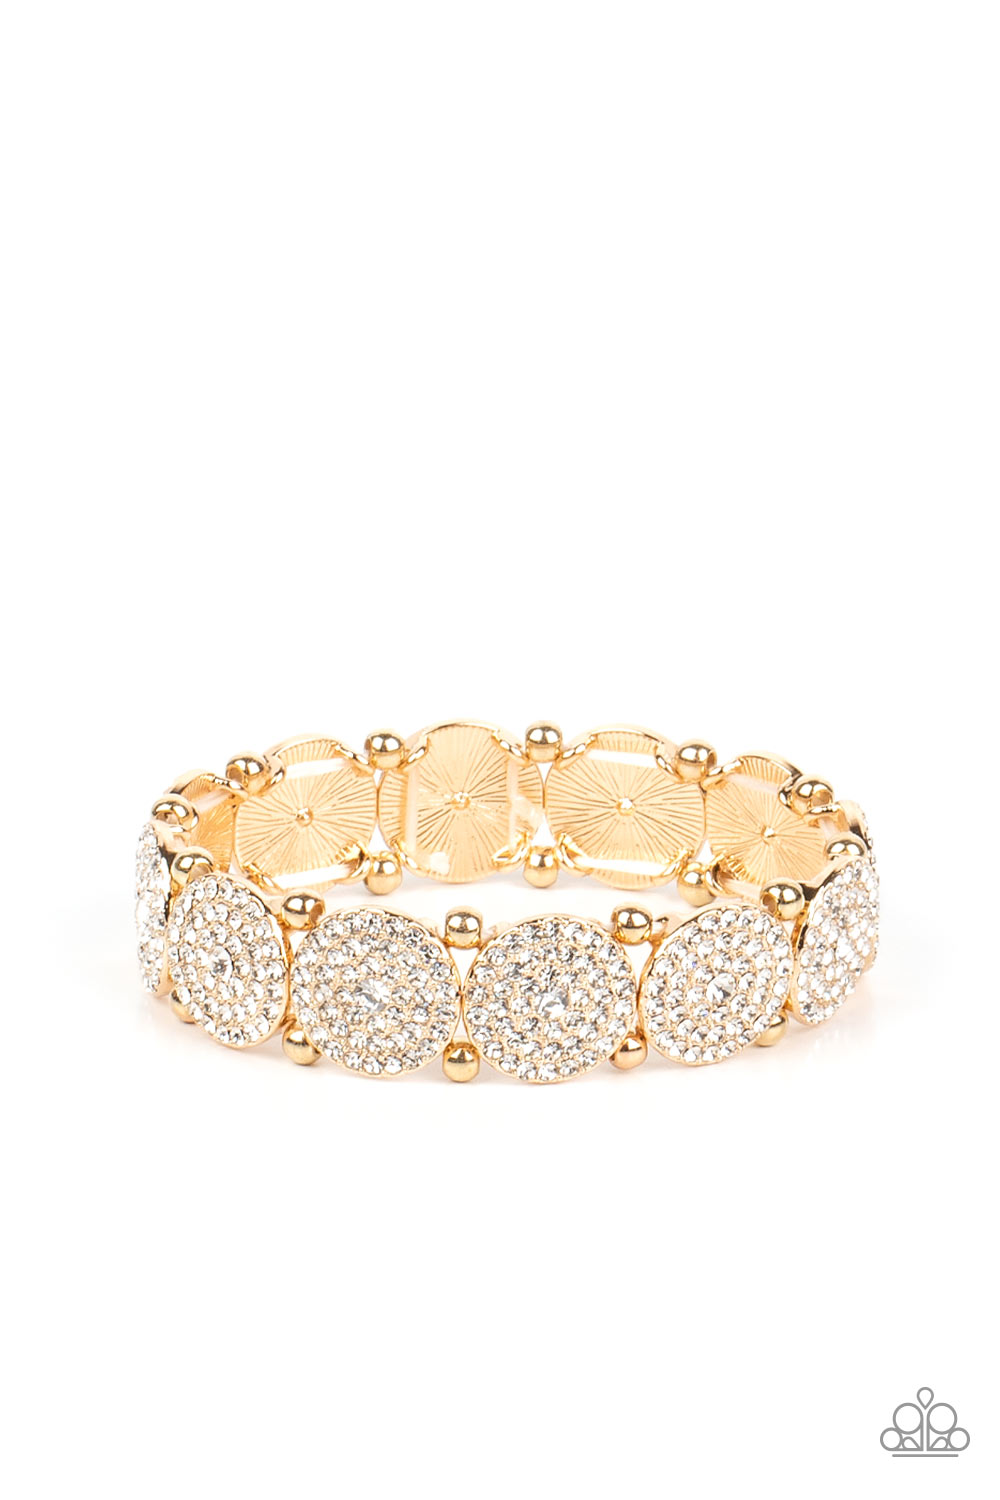 paparazzi-accessories-palace-intrigue-gold-bracelet